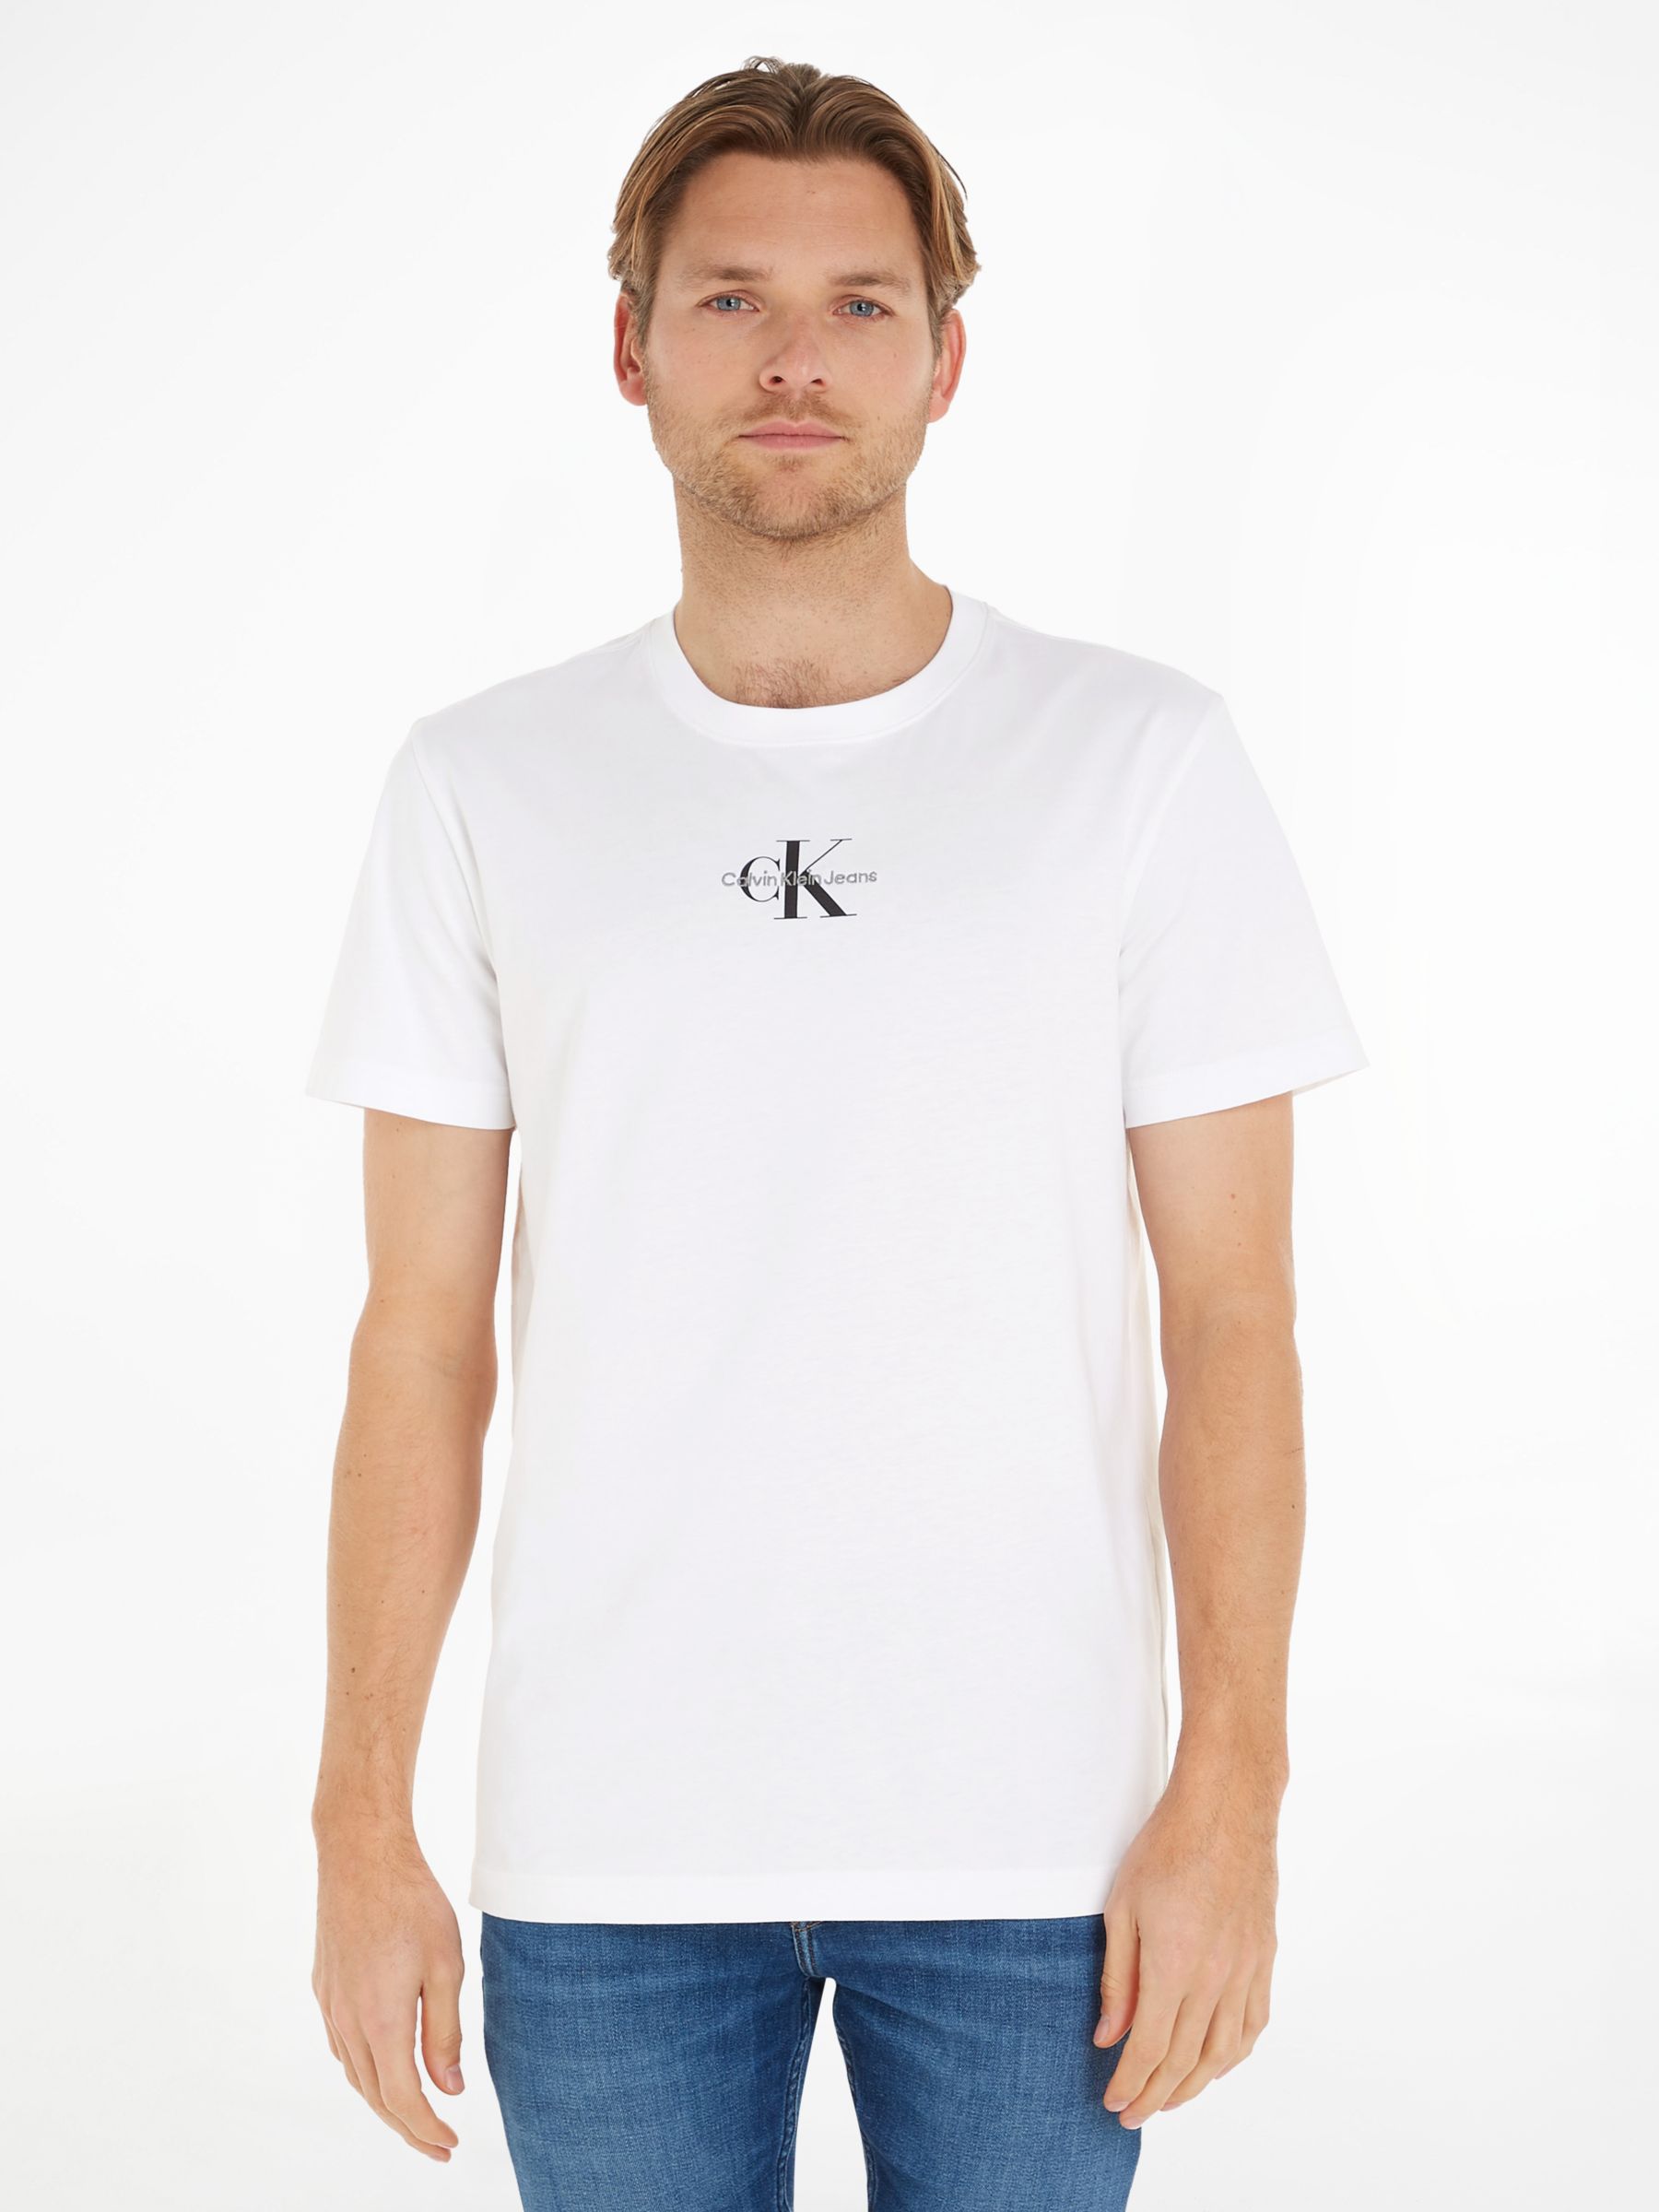 Plain Men's T-Shirts from Calvin Klein | John Lewis & Partners